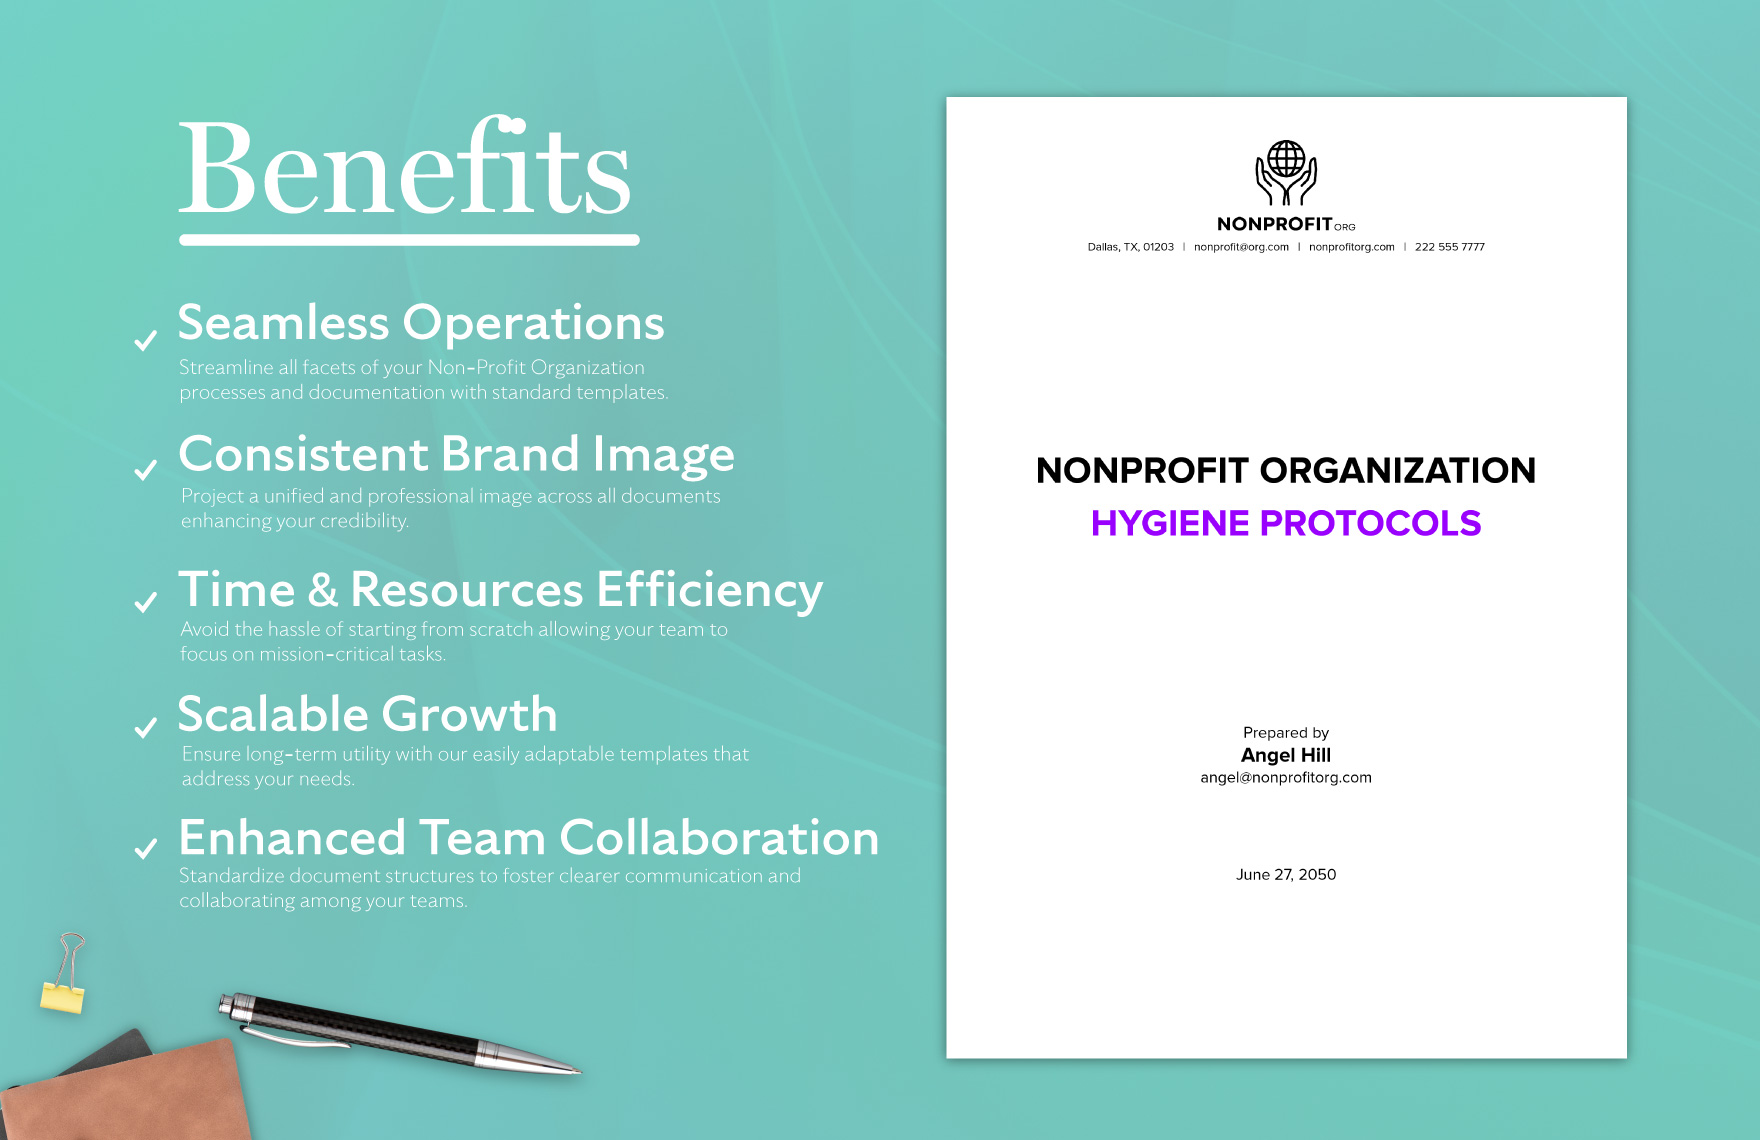 Nonprofit Organization Hygiene Protocols Template